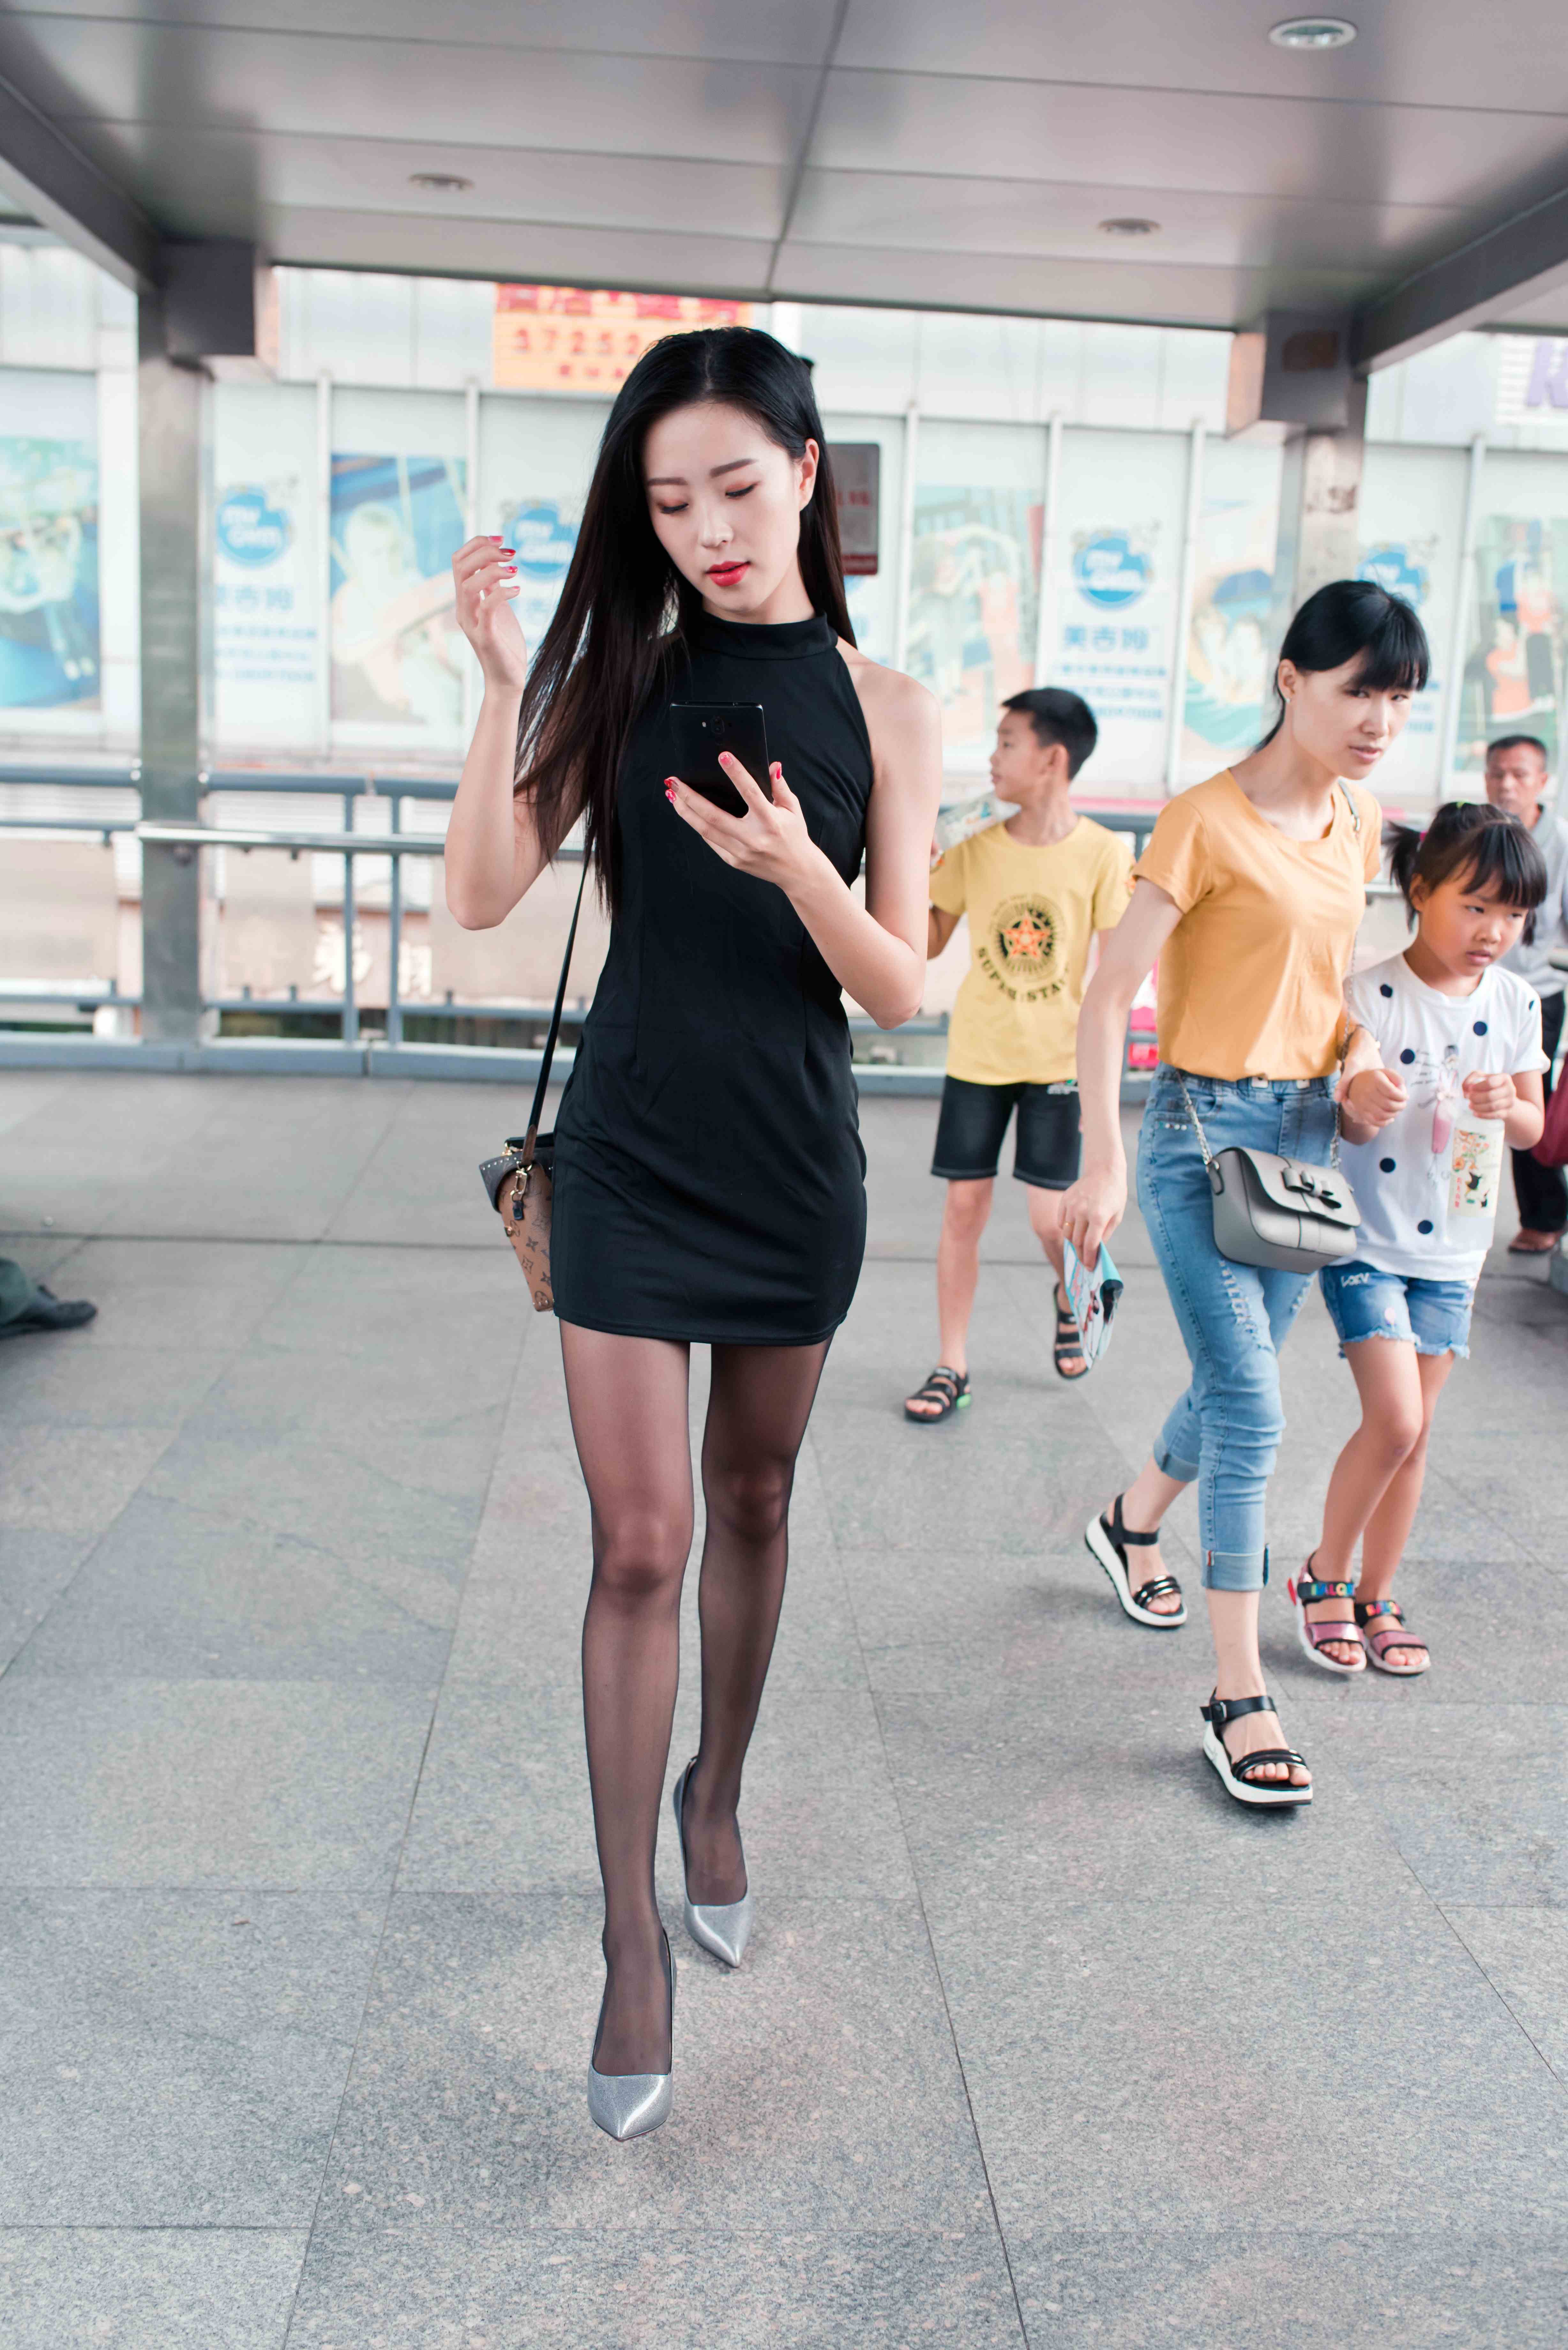 China Beauty Legs and feet 710